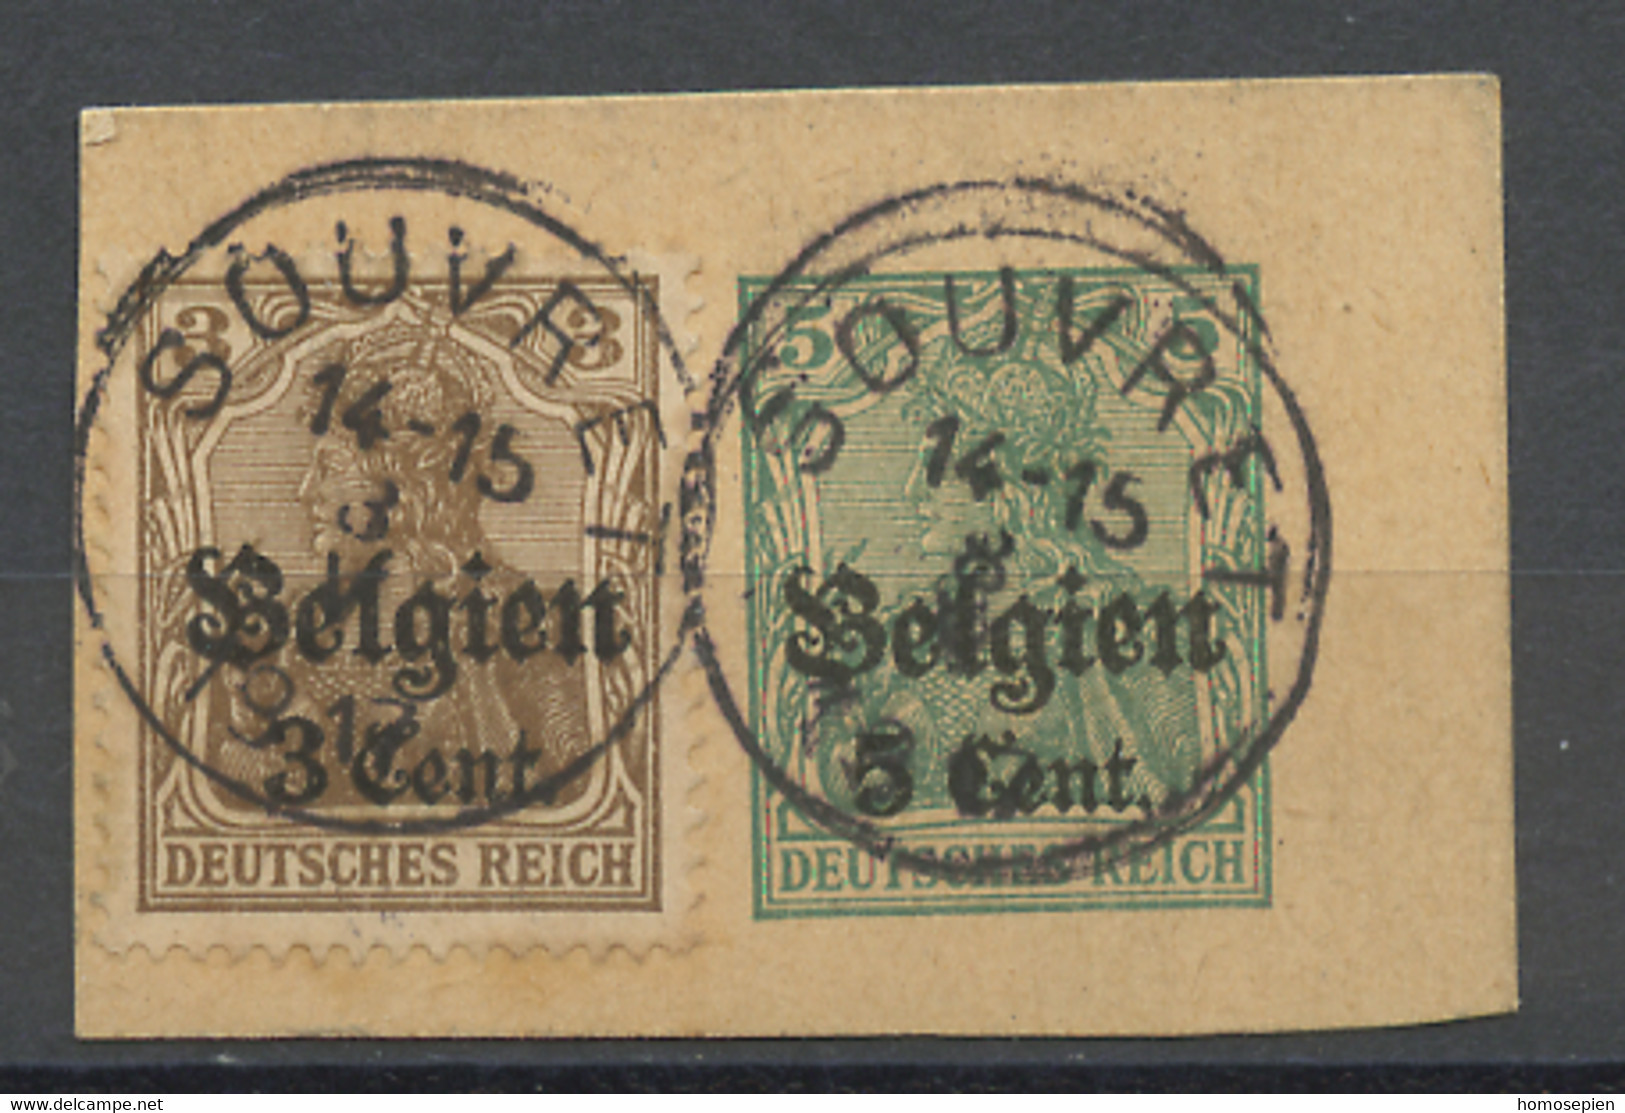 Belgique - Belgium - Belgien Entier Postal 1916-18 Y&T N°EPOA12 - Michel N°GZSBD12 (o) - 5cs5p Germania - Extrait - Ocupación Alemana